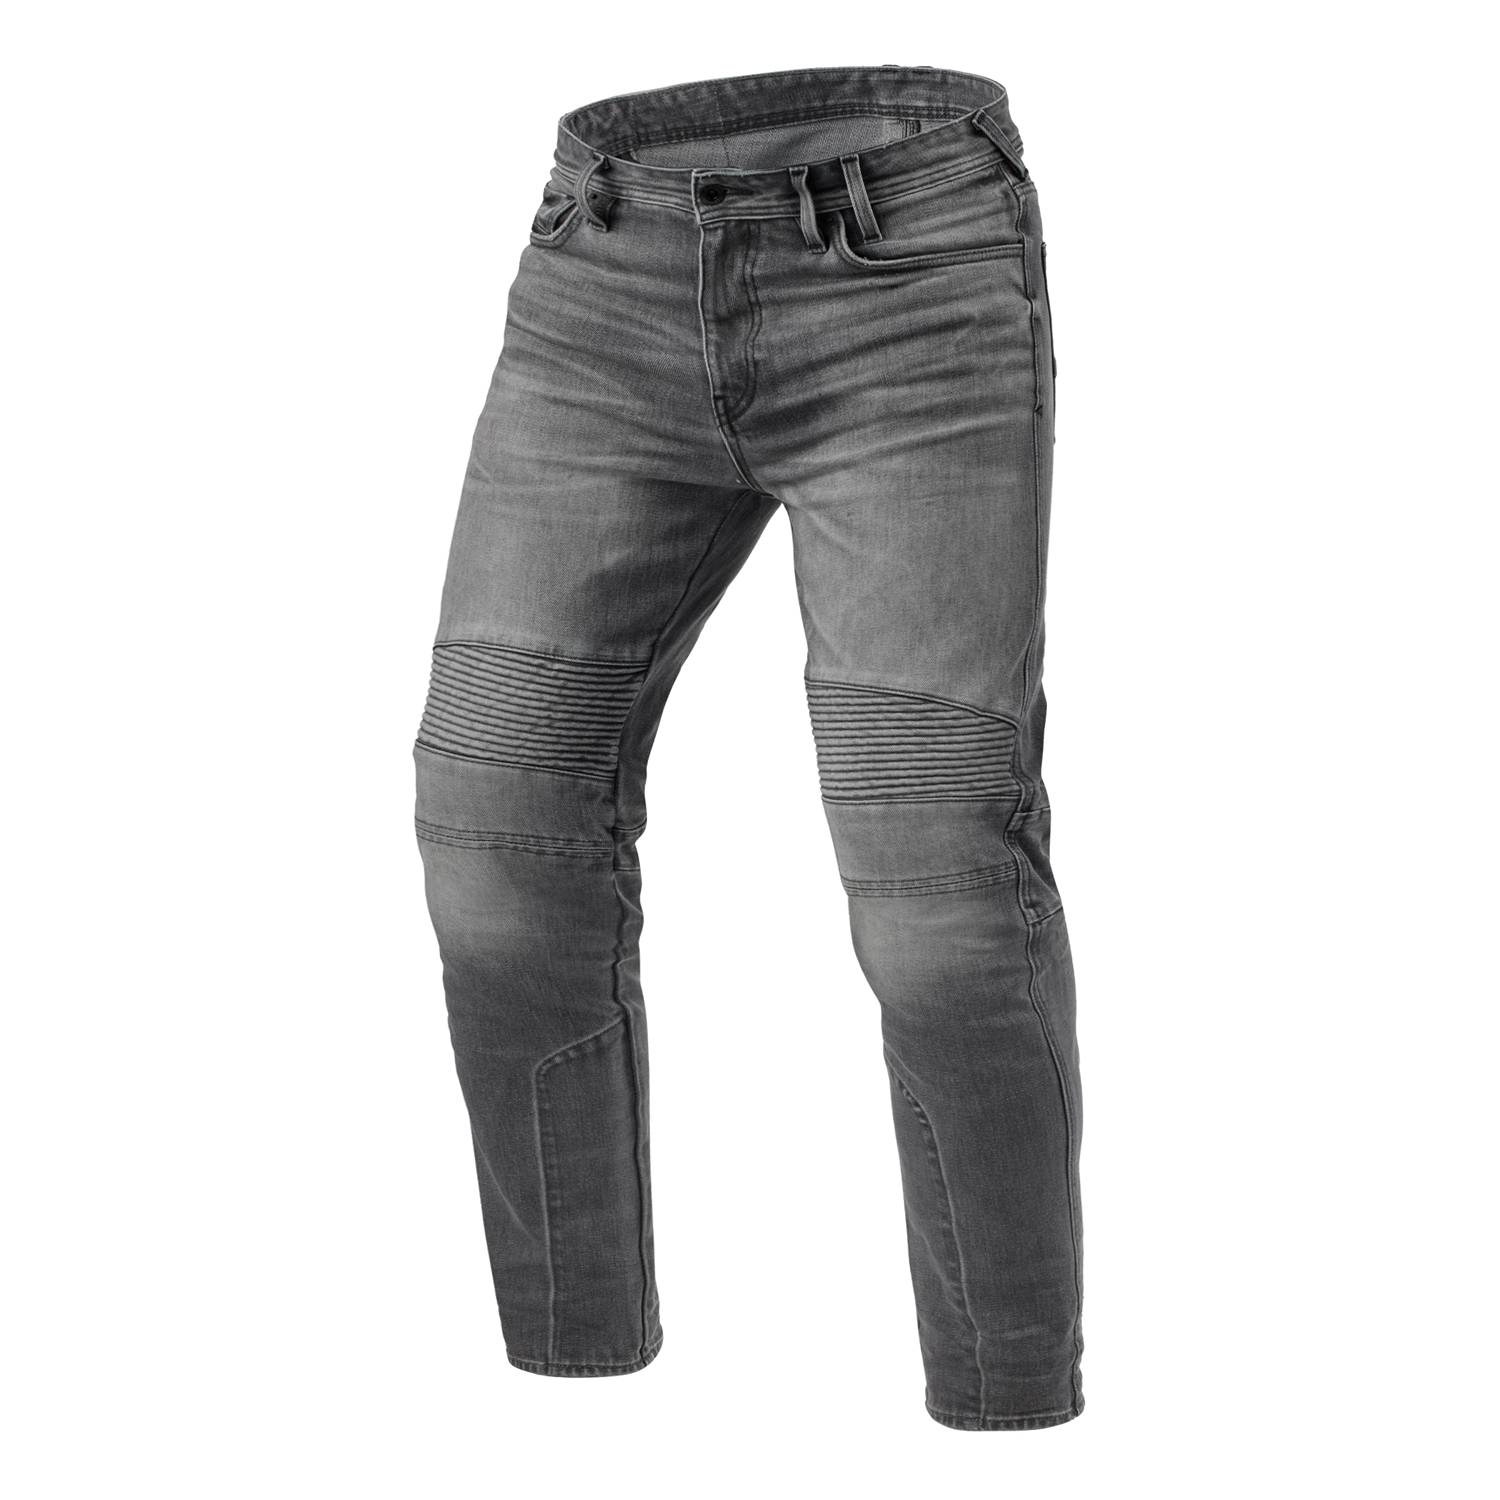 Image of REV'IT! Jeans Moto 2 TF Medium Grey Used L36 Motorcycle Jeans Größe L36/W33